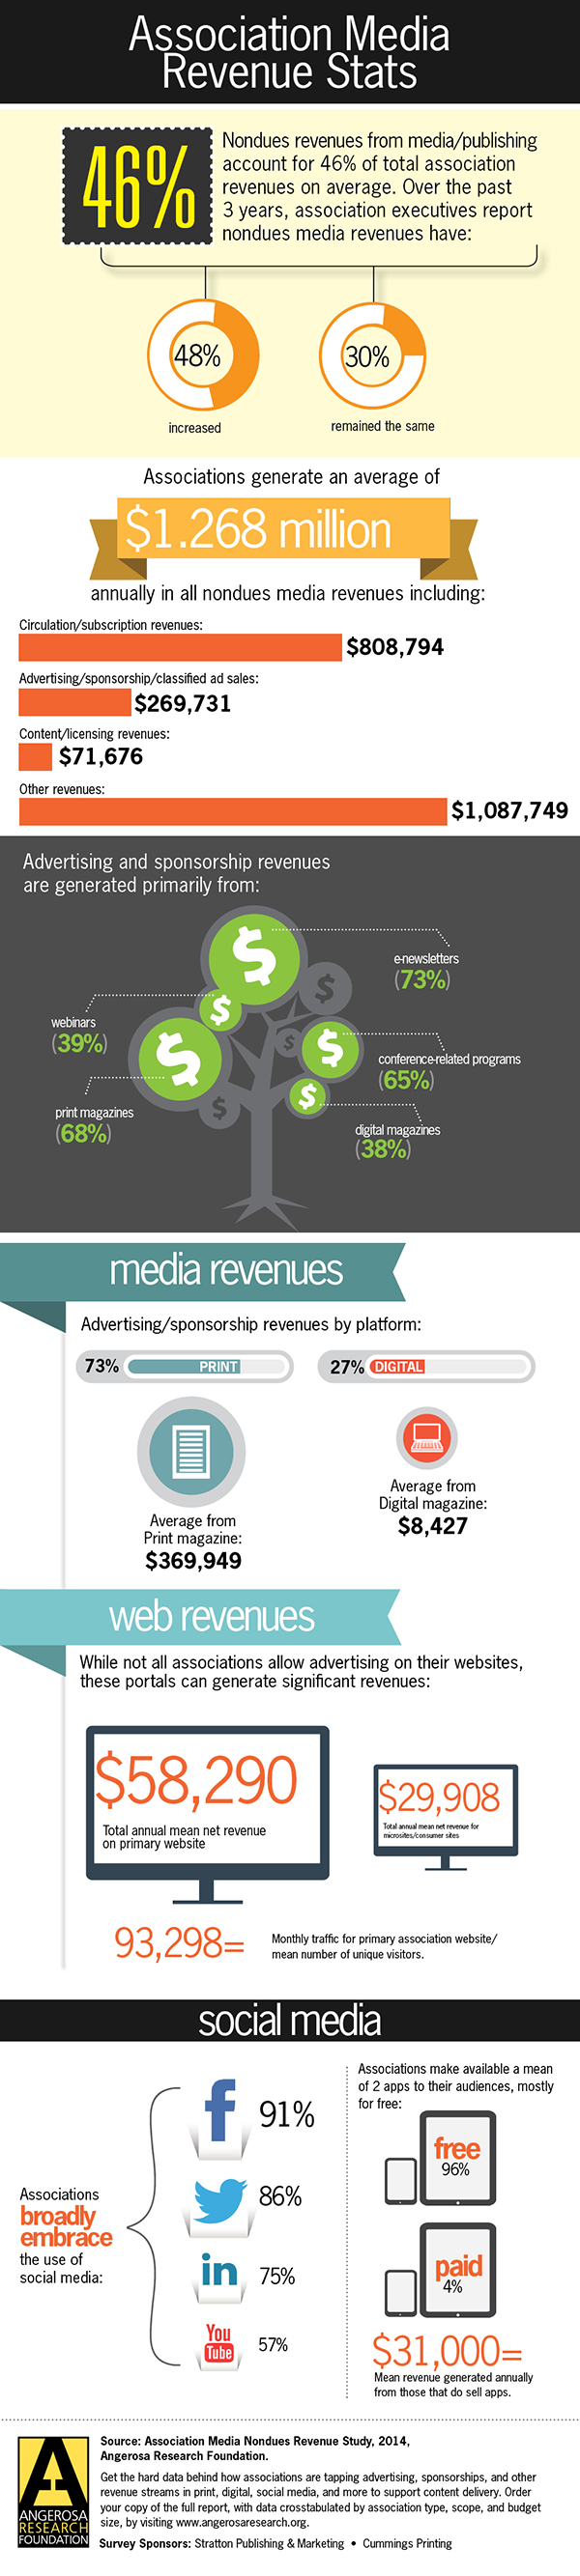 Association Media Revenue Stats